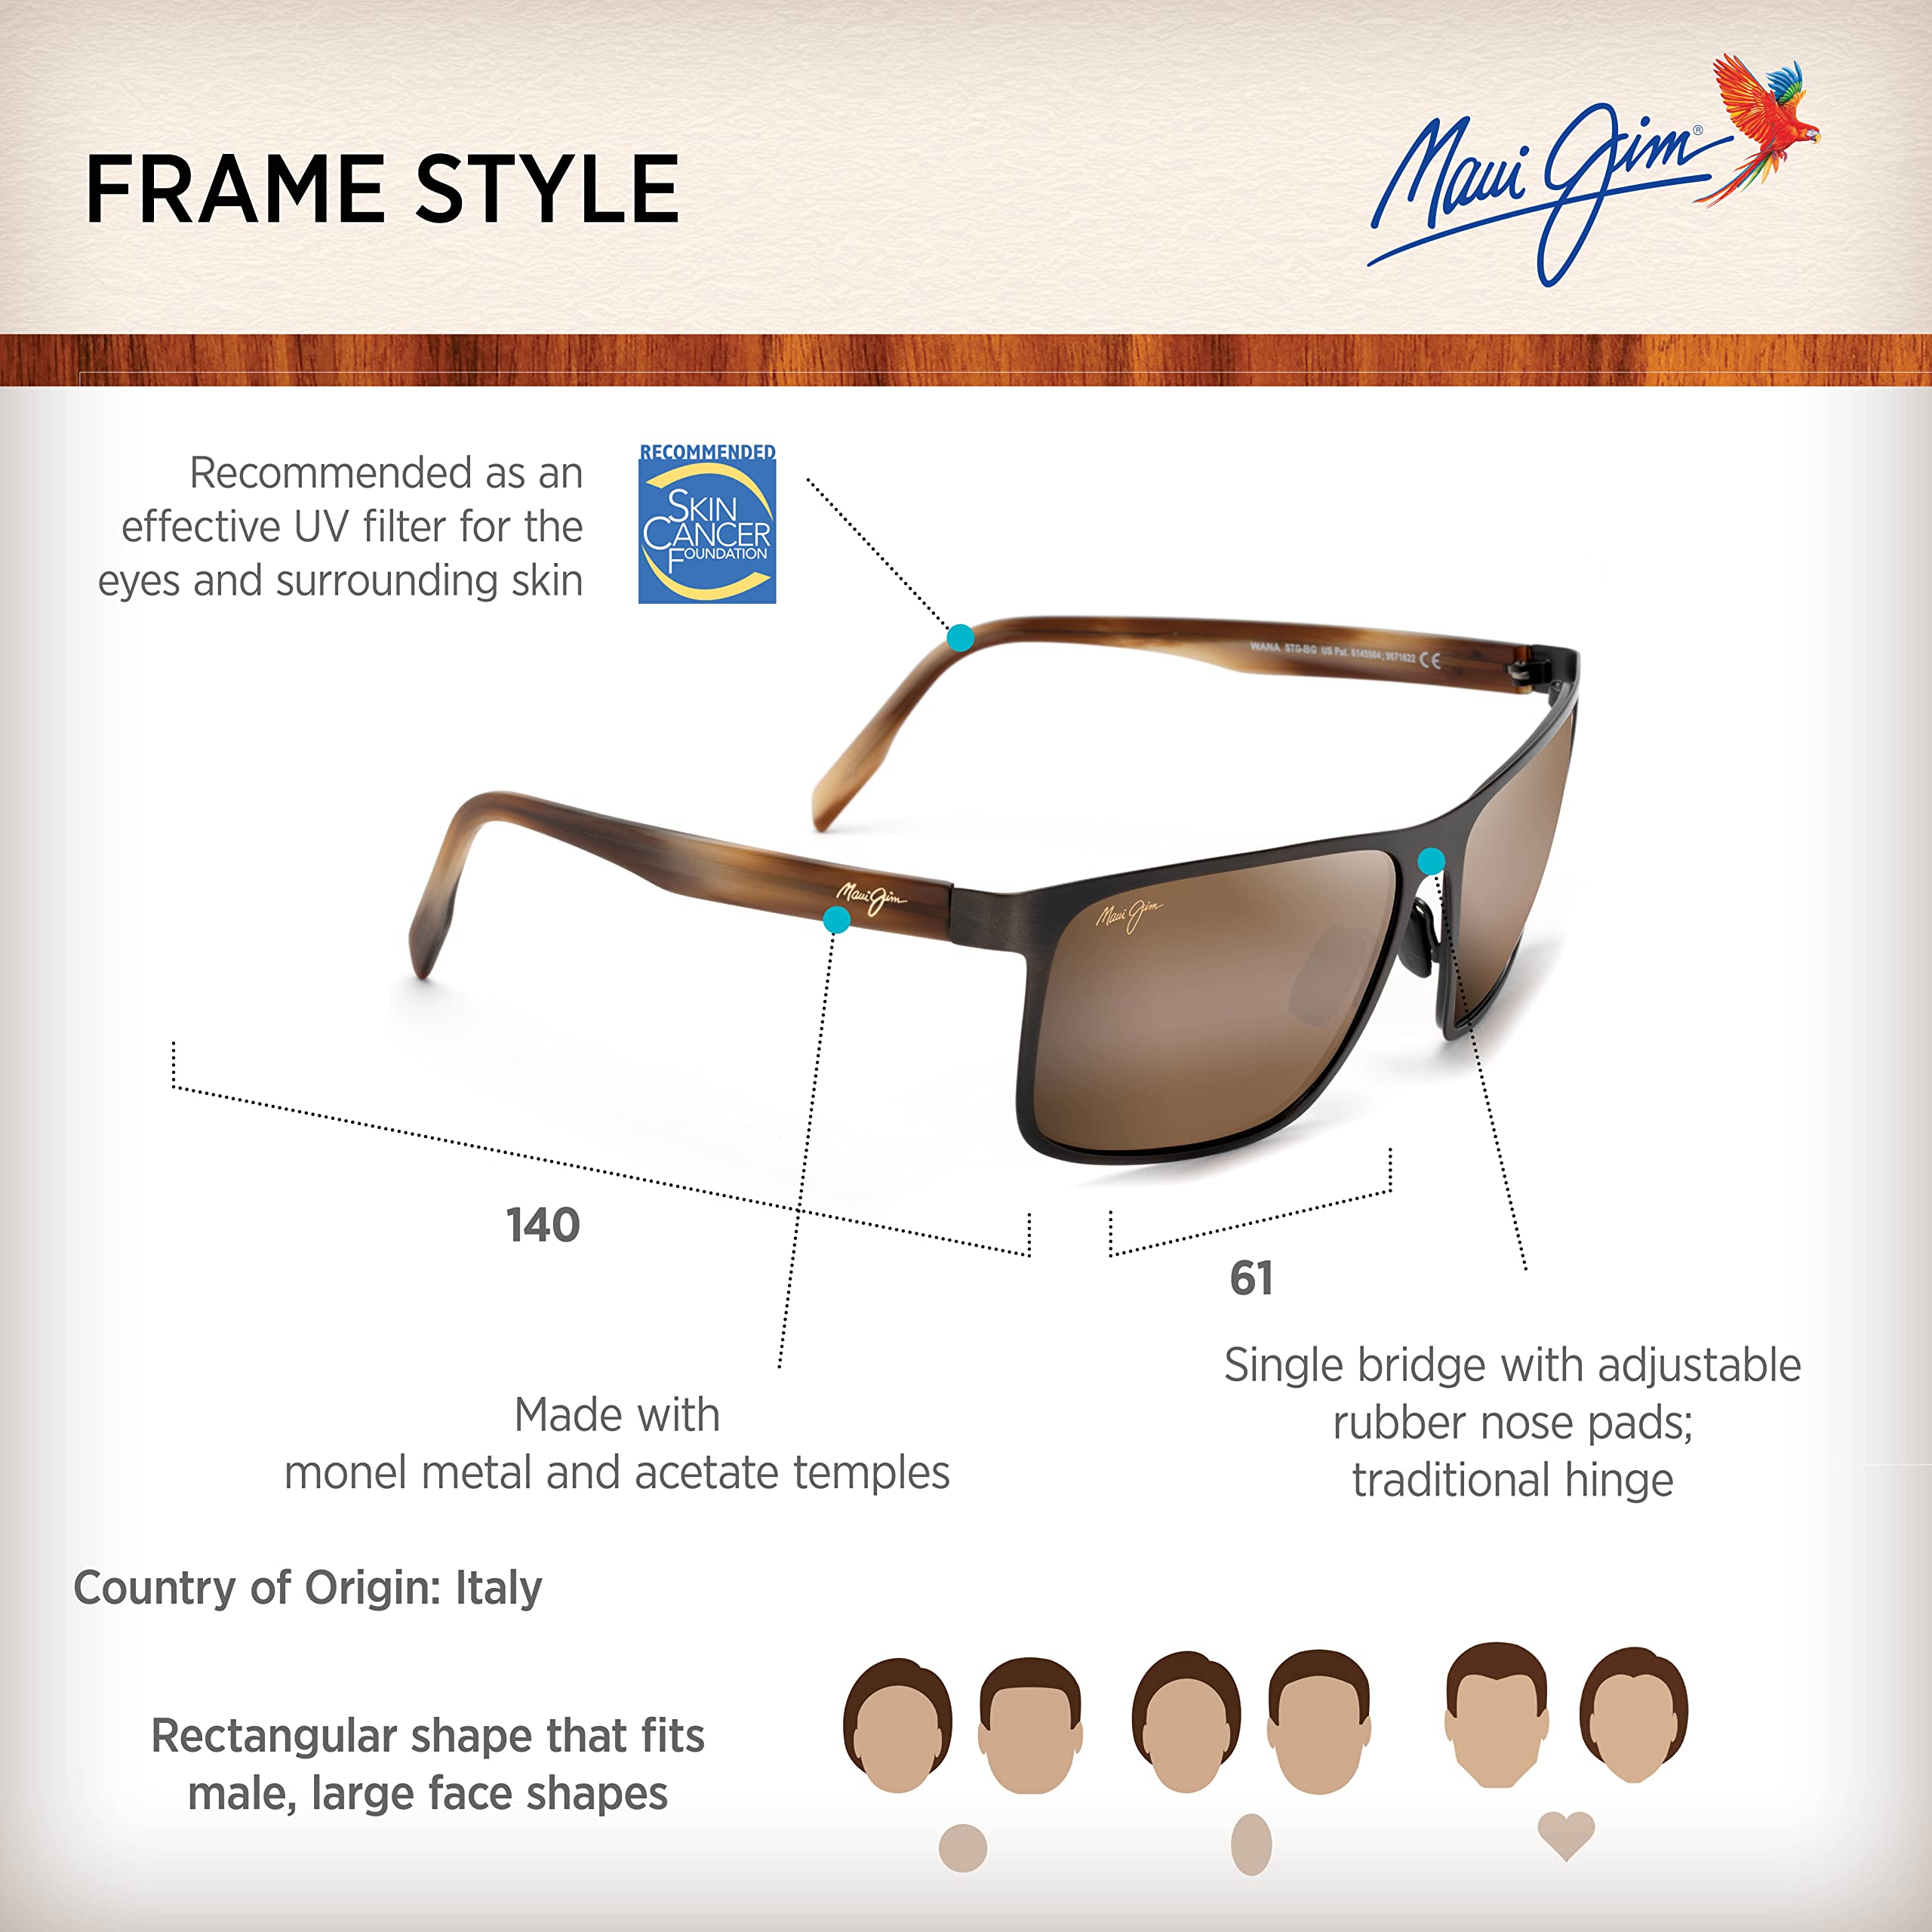 Maui Jim Men's Wana Polarized Rectangular Sunglasses